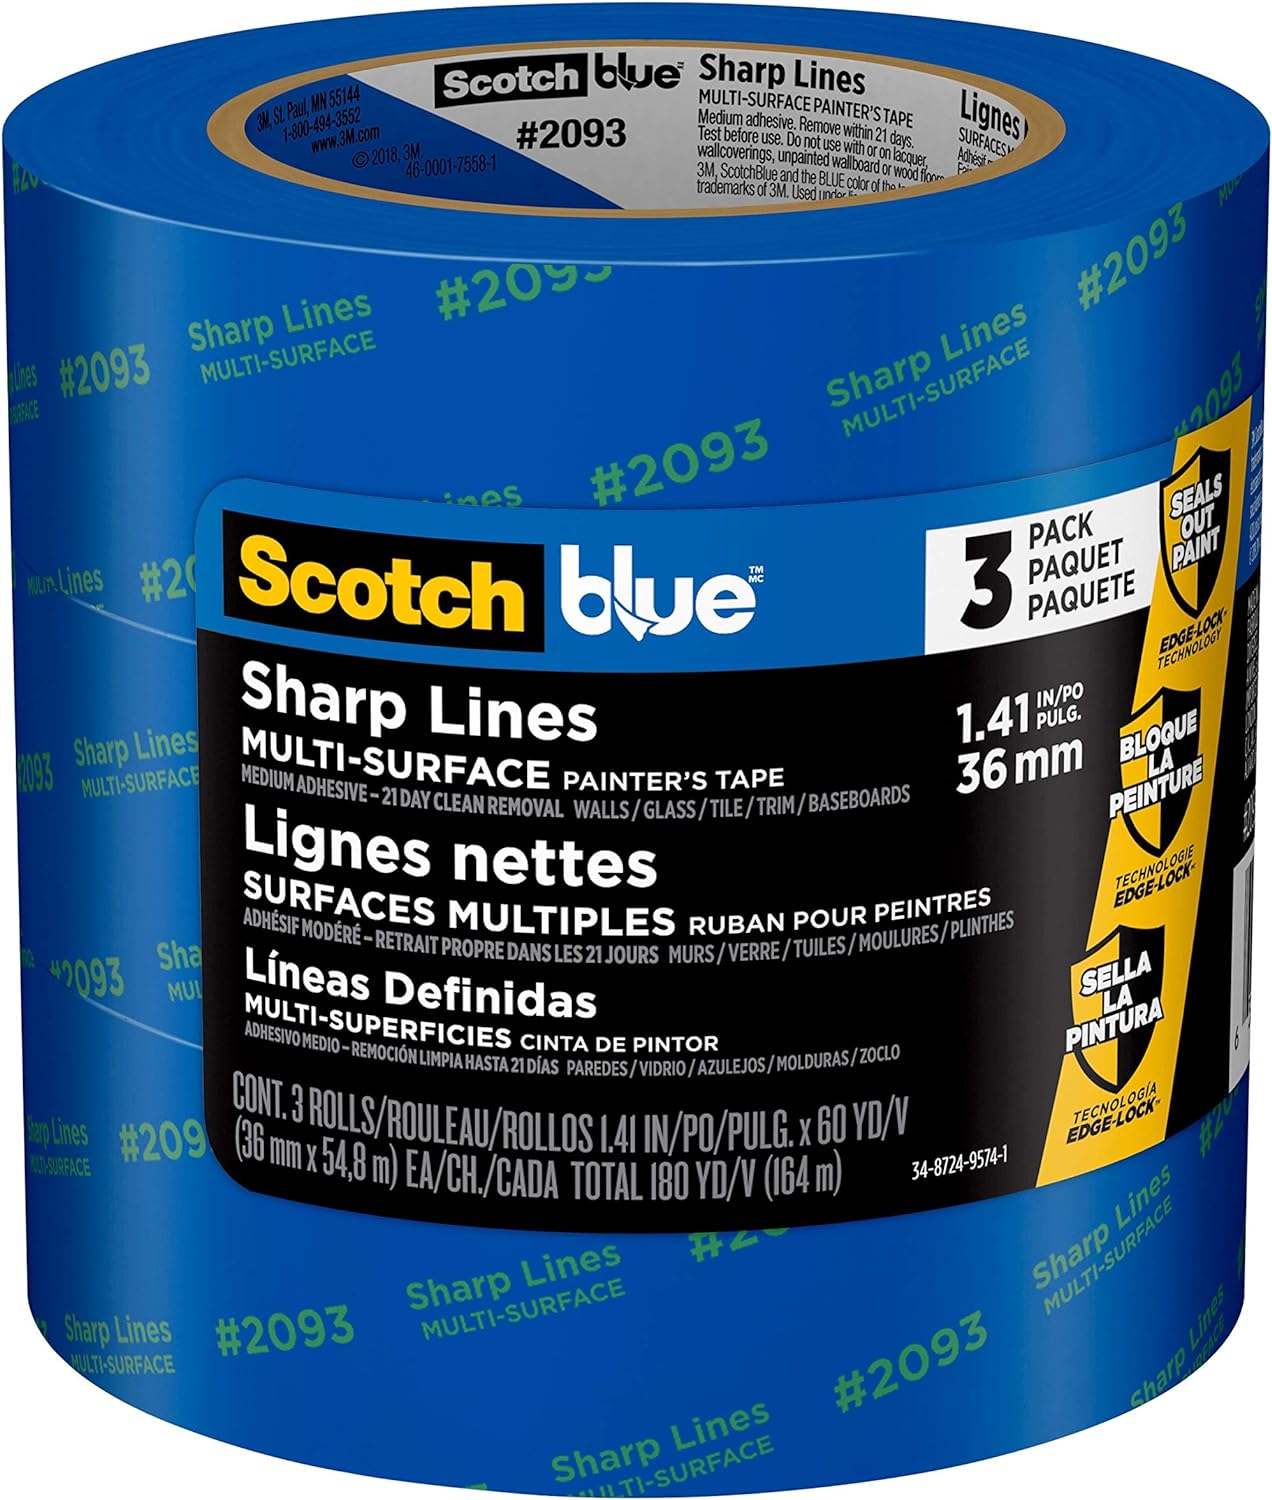 Scotch Painter's Tape ScotchBlue Sharp Lines Painter's Tape, 1.41 inch x 60 yard, 3 Rolls